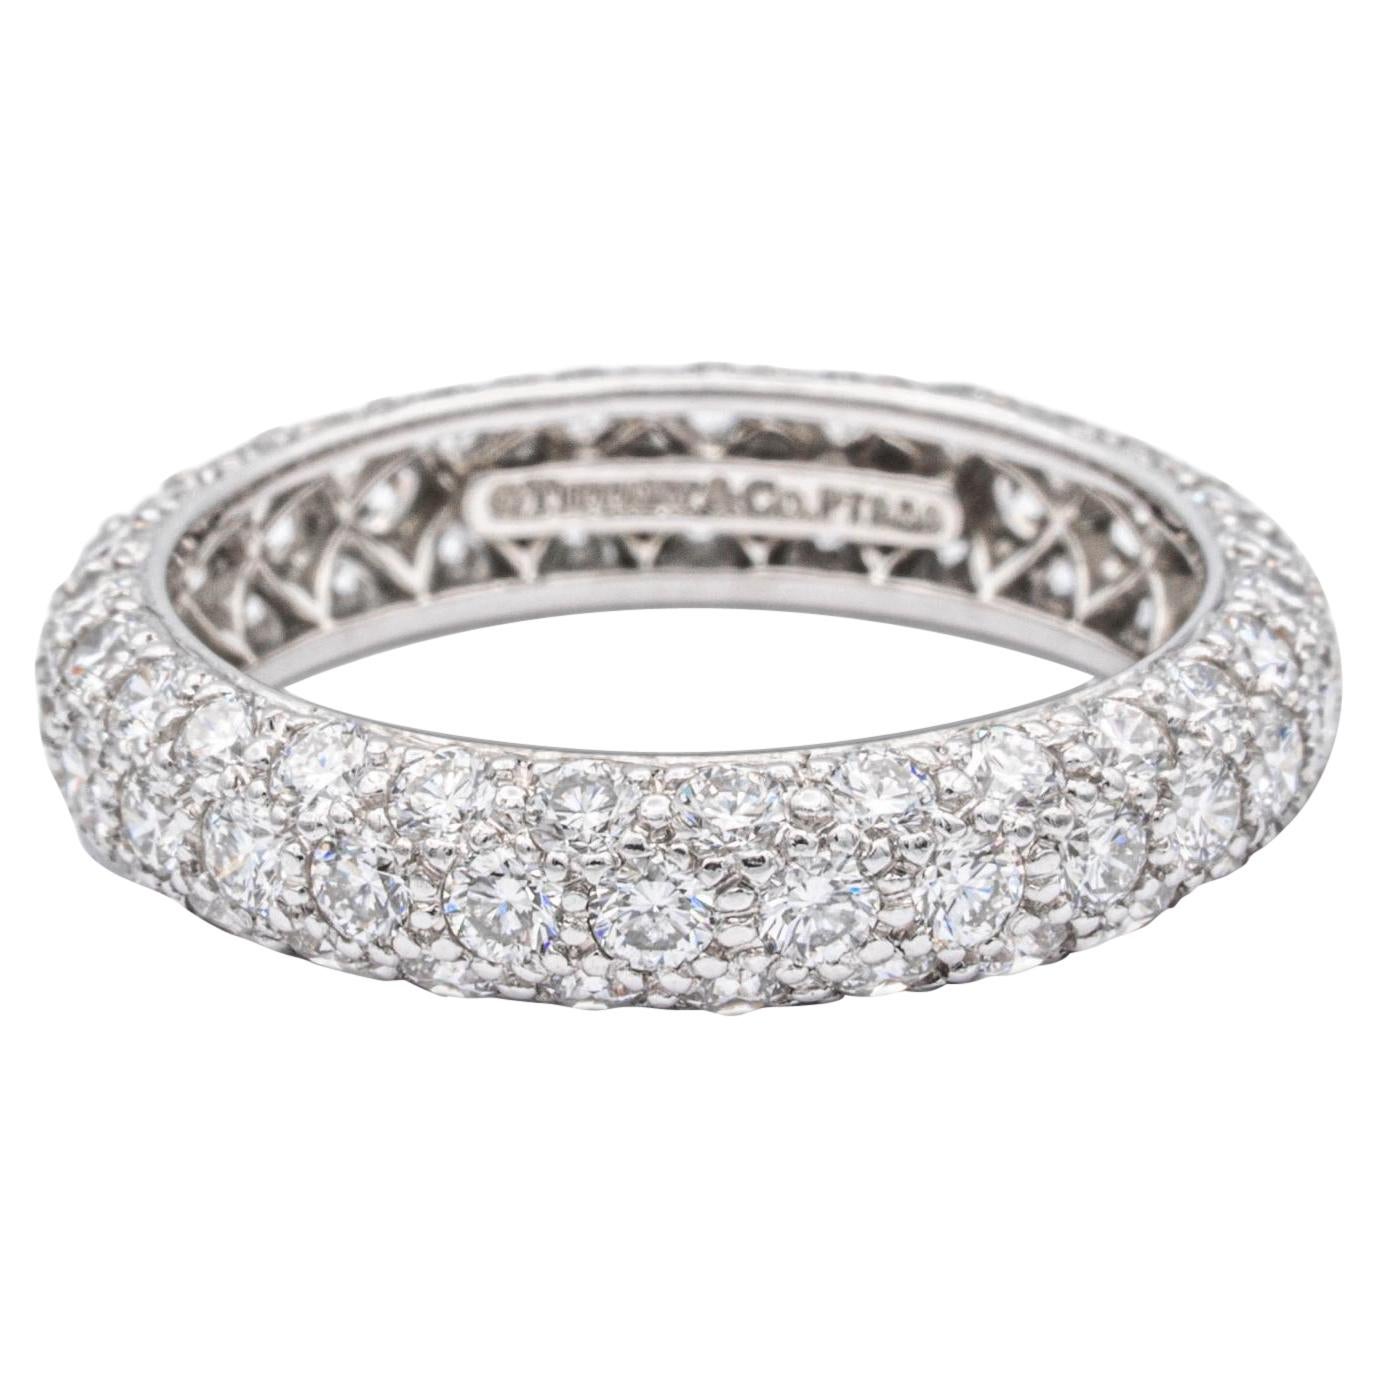 Tiffany & Co. 3 Row Etoile Diamond Pave Platinum Eternity Band Ring 1.51 Ct Totl